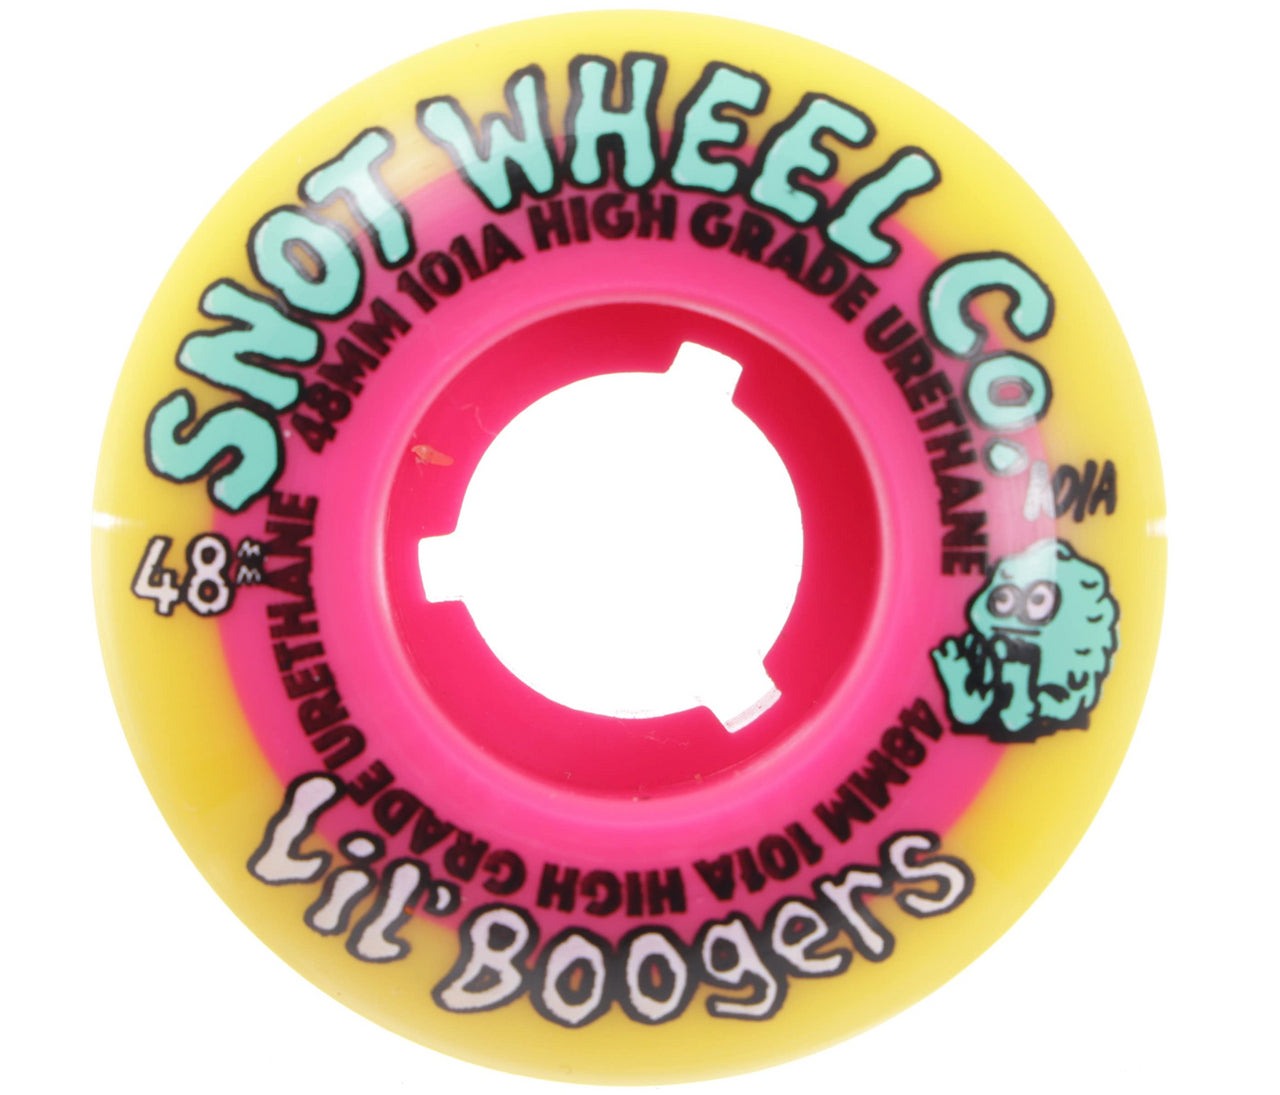 SNOT Lil Boogers Swirls Wheels Set Yellow Pink 48mm/101a